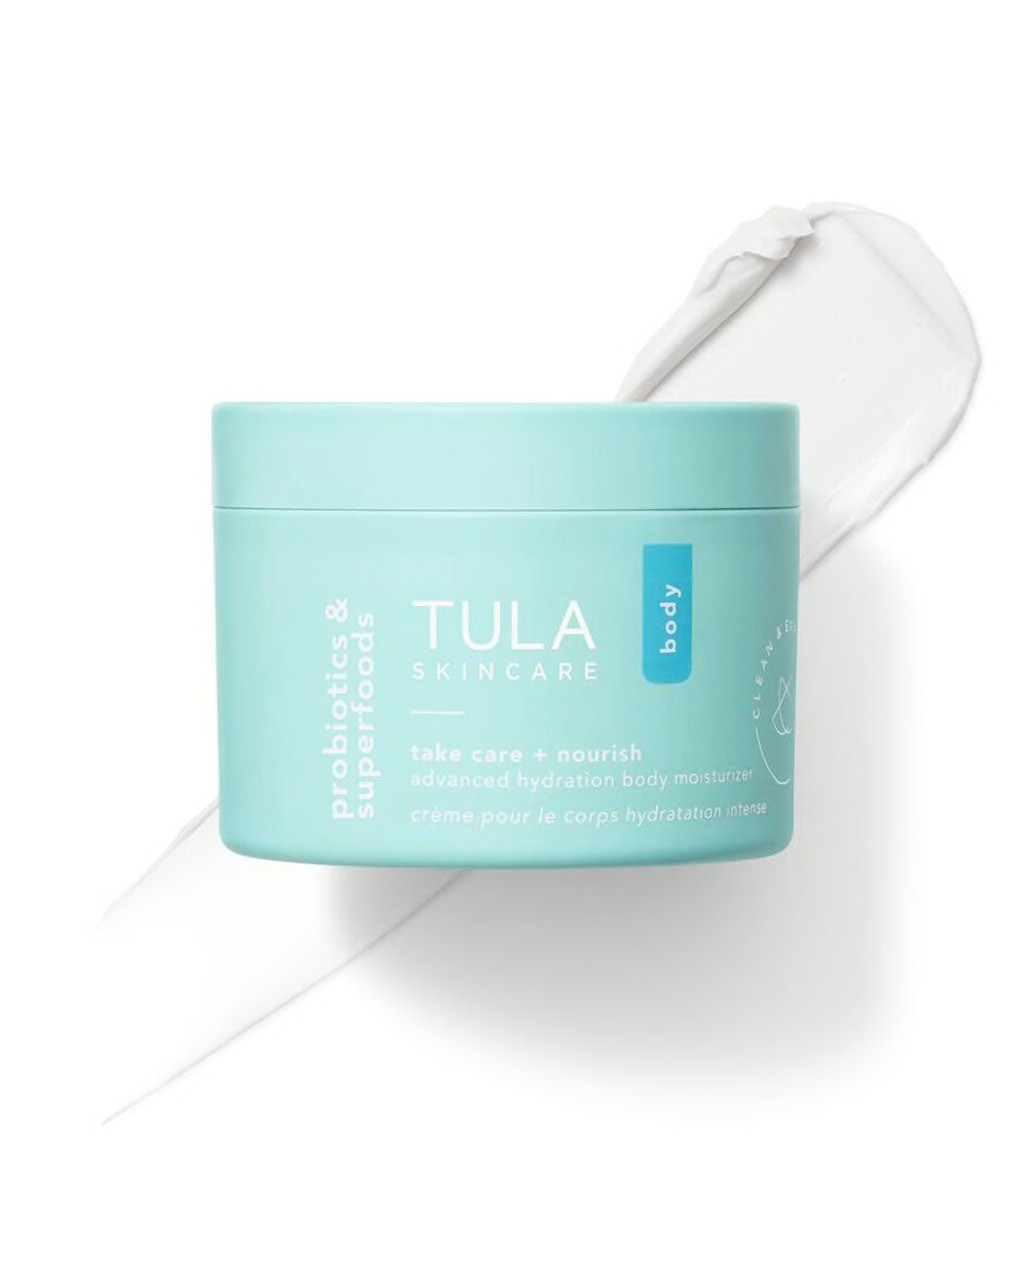 Tula take care + nourish body moisturizer